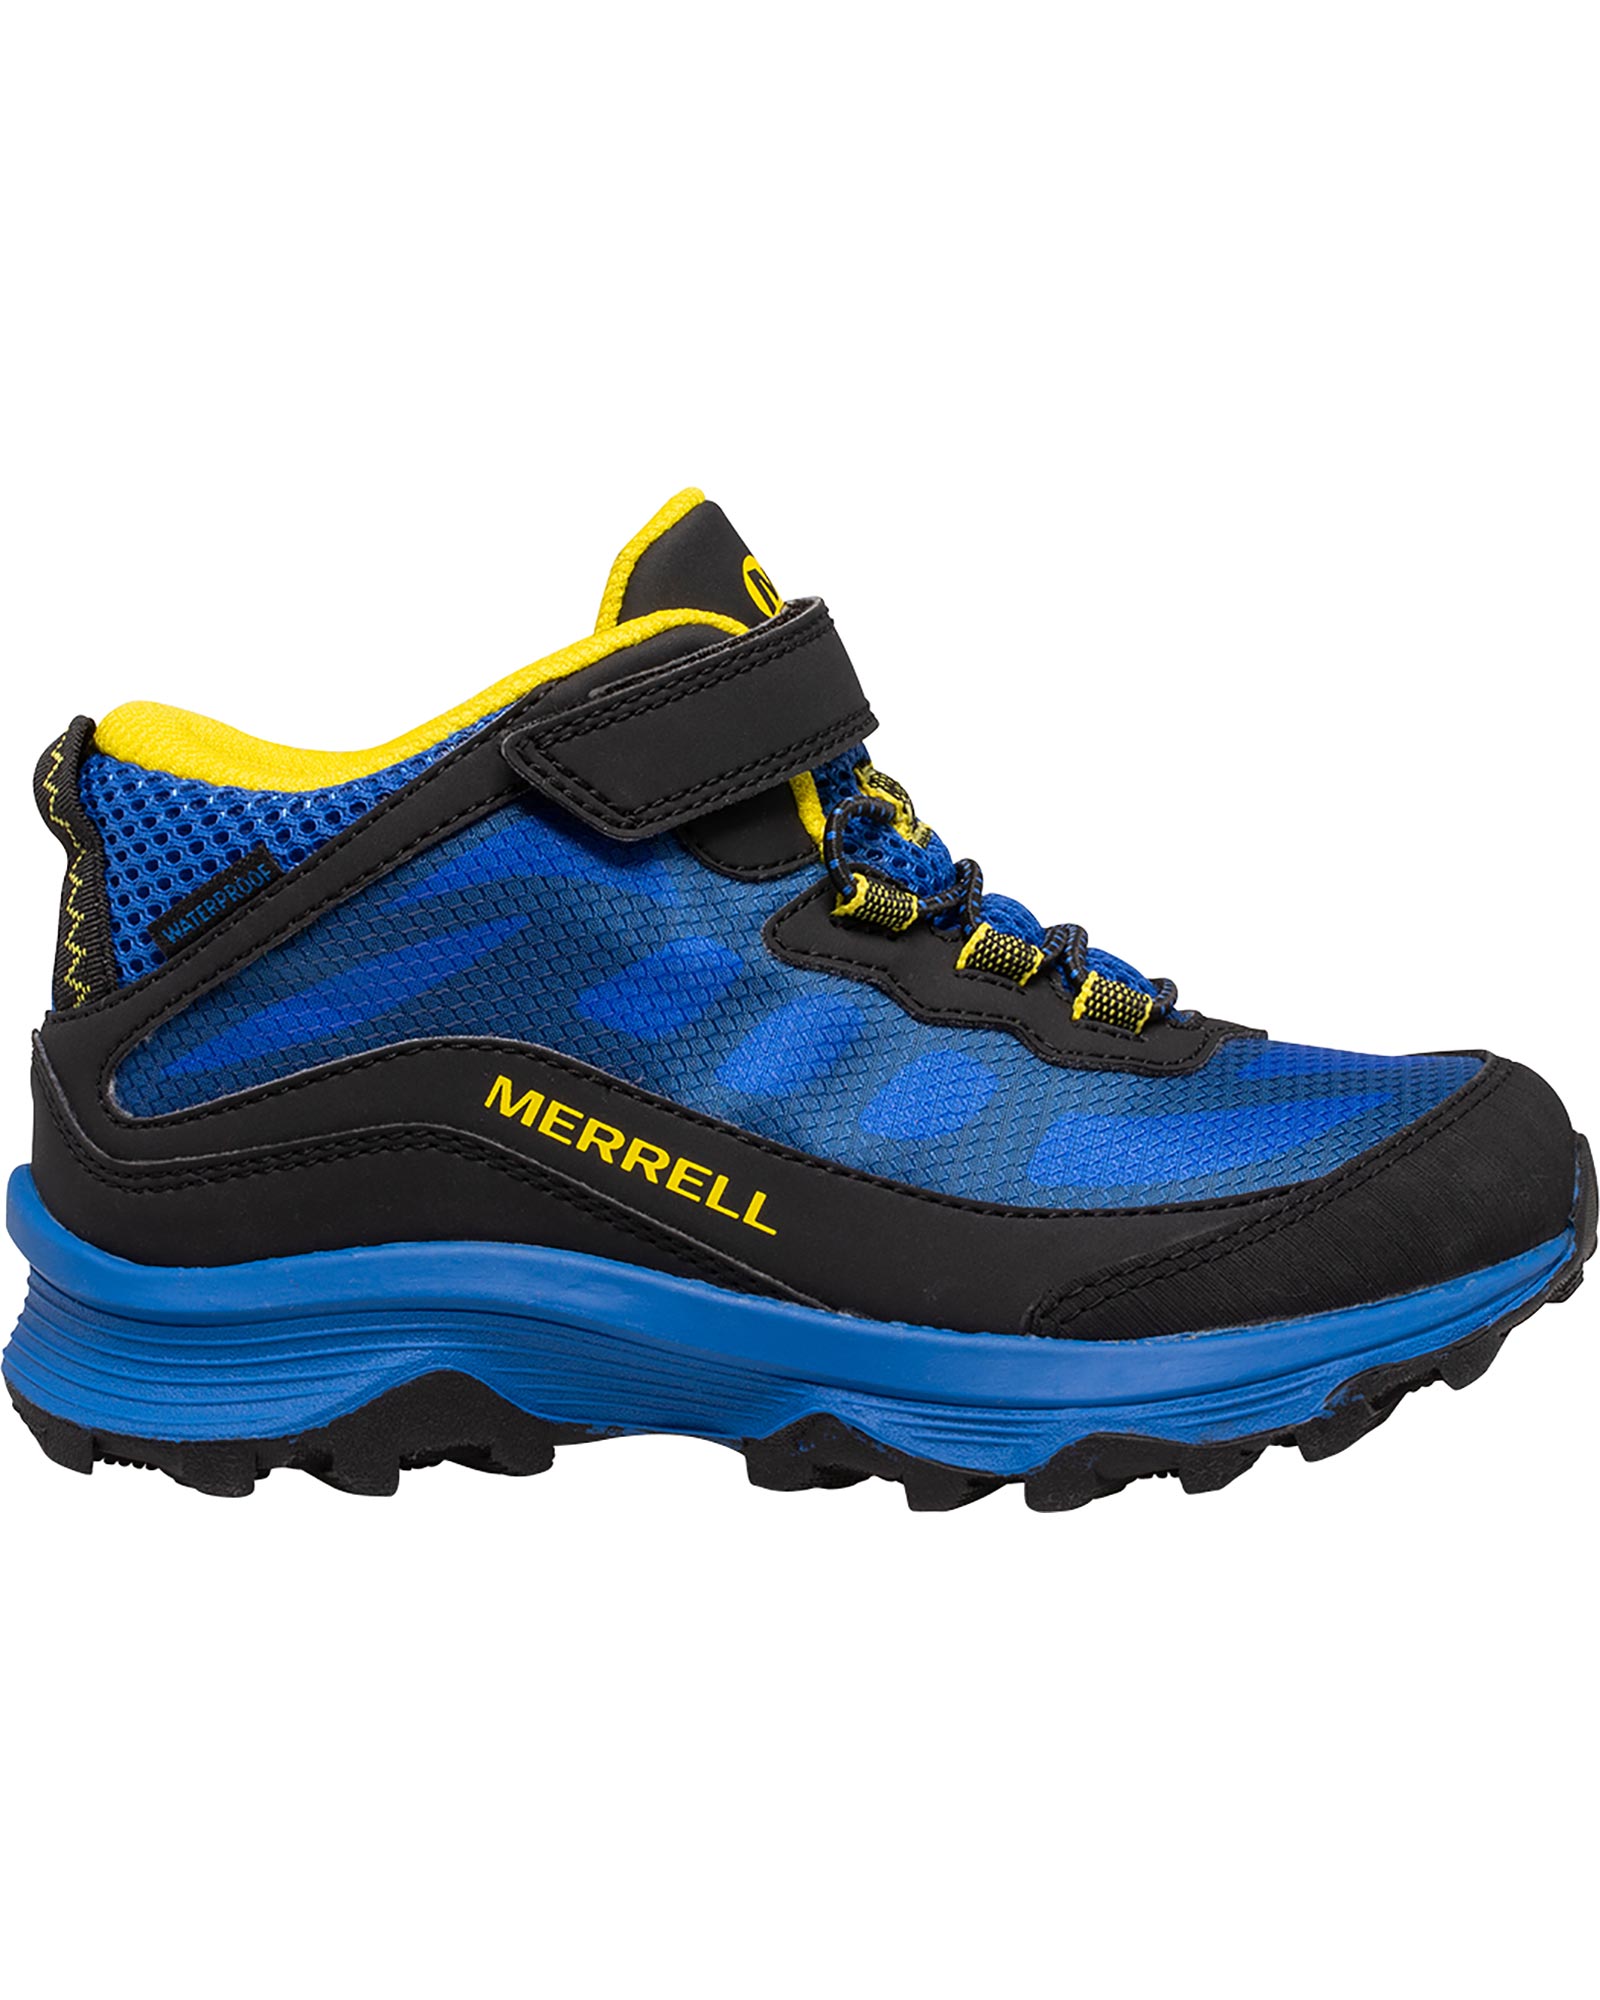 Merrell Moab Speed A/C Kids’ Mid Waterproof Boots - Black/Royal/Yellow UK 5